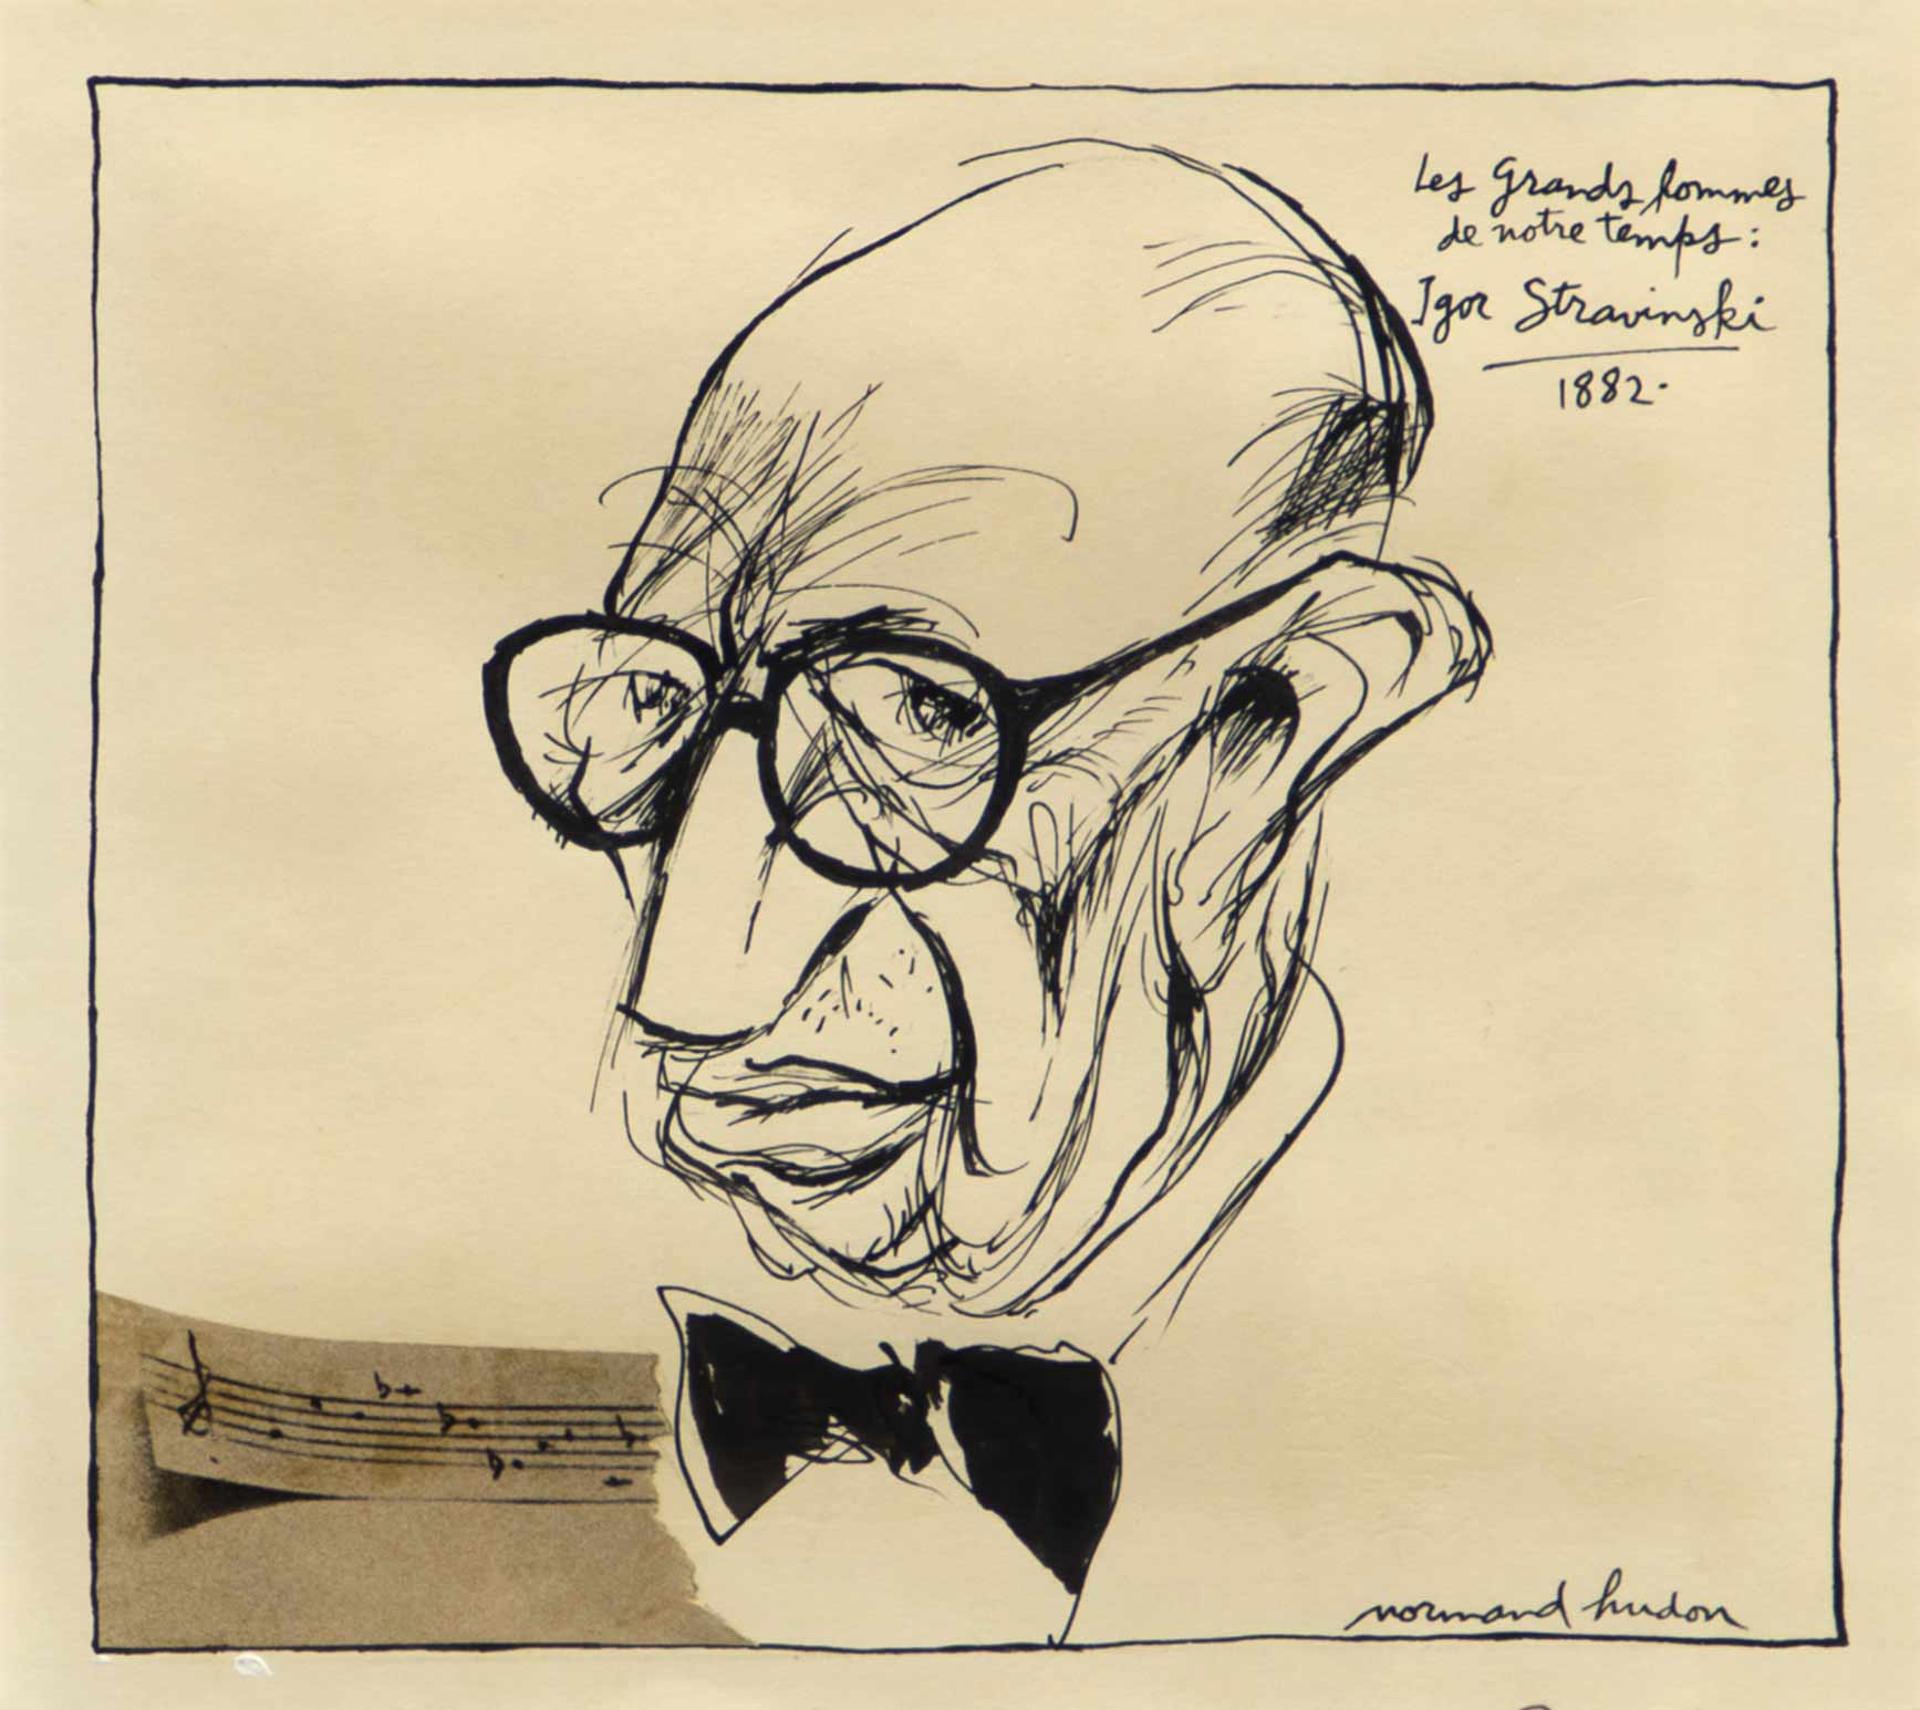 Normand Hudon (1929-1997) - Igor Stravinski (1882-), n.d.